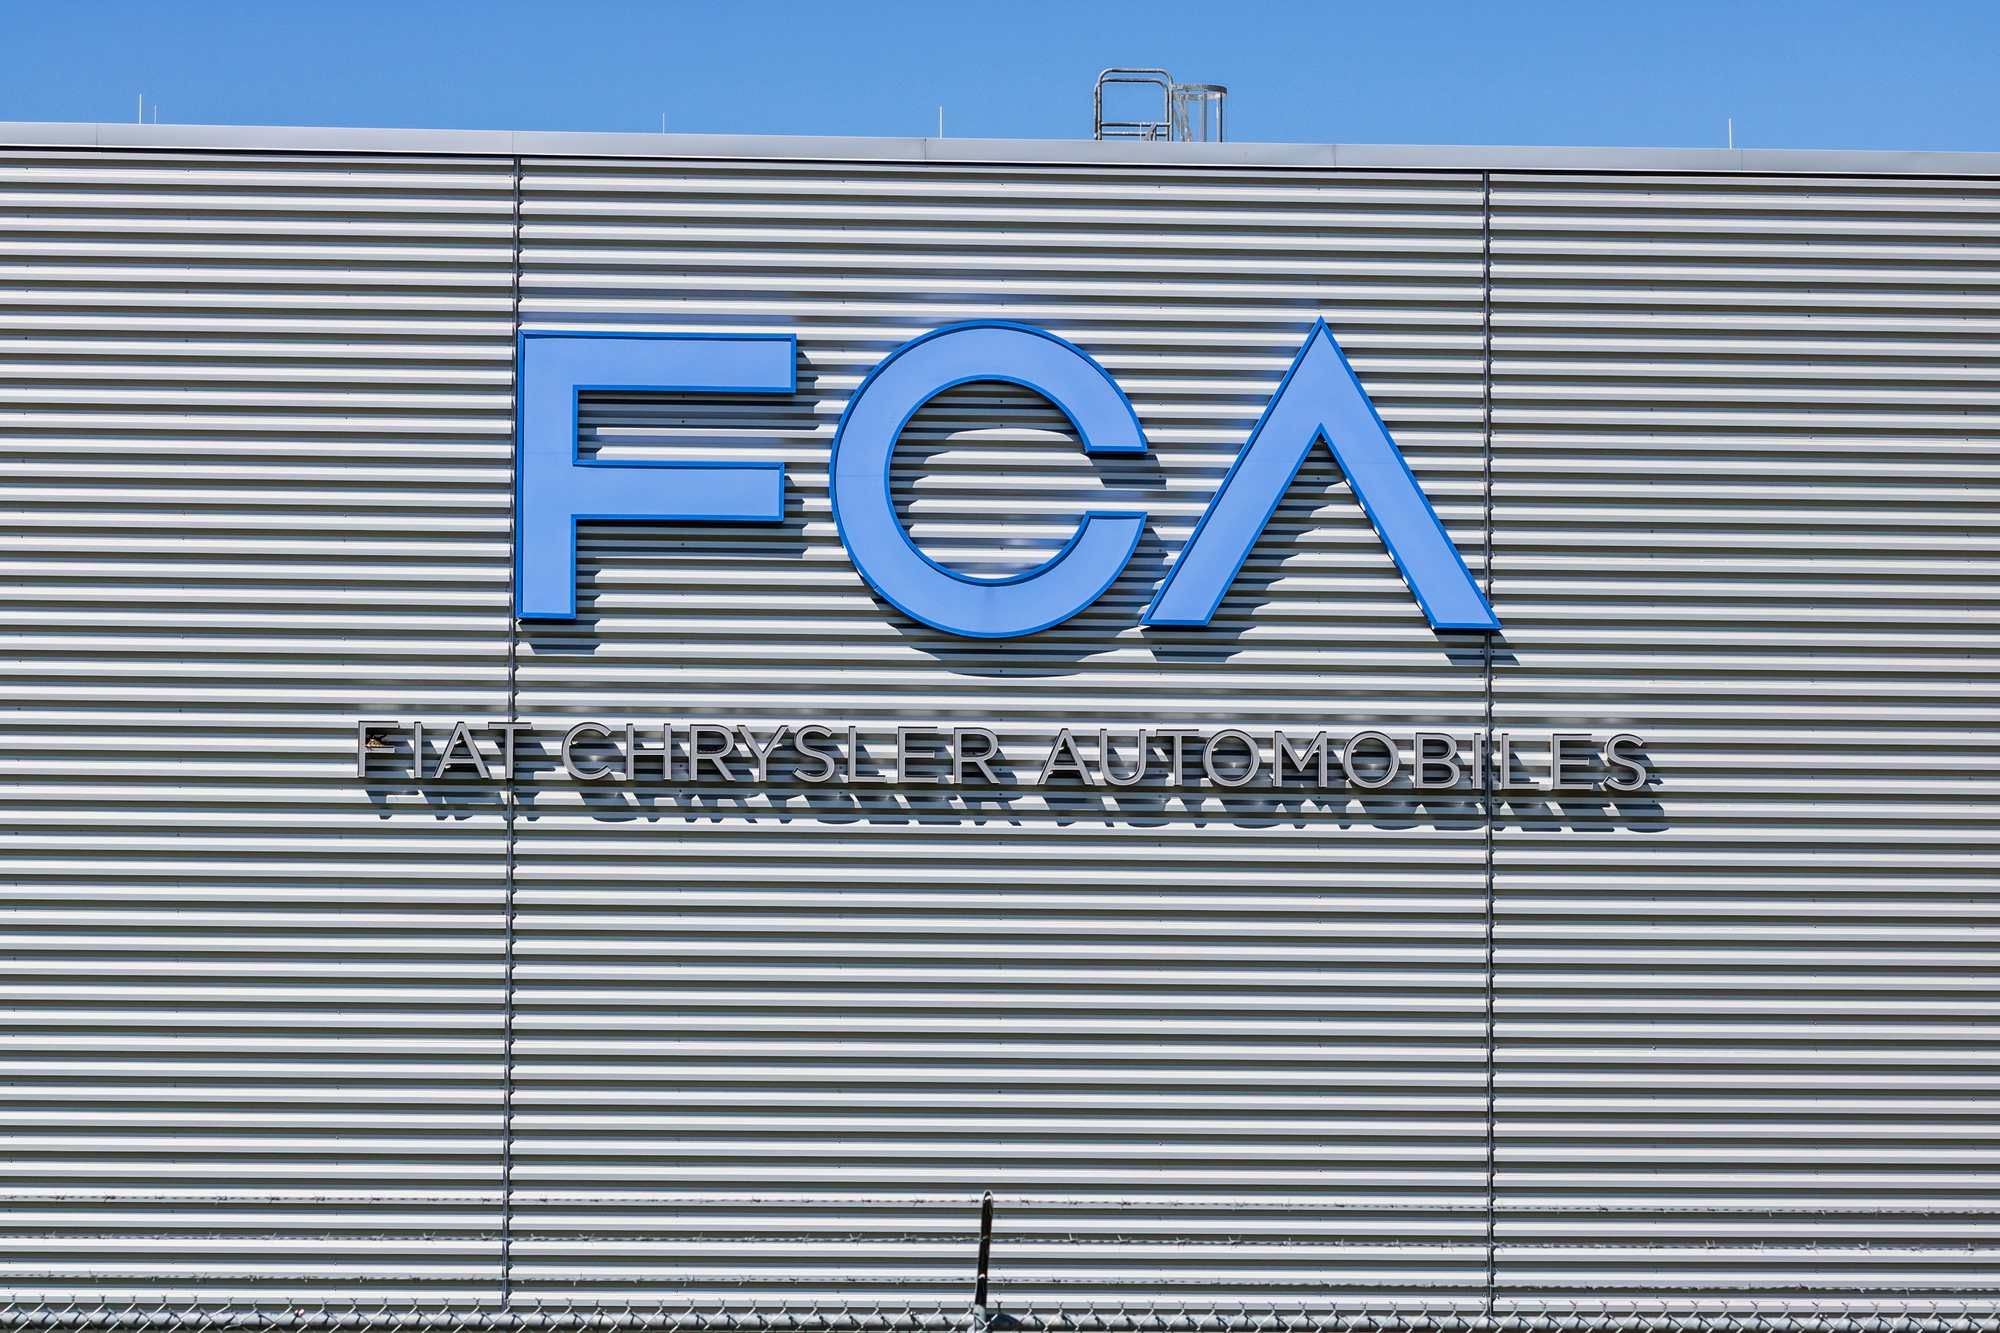 FCA building regarding the Fiat Chrysler Automobile Group claim 